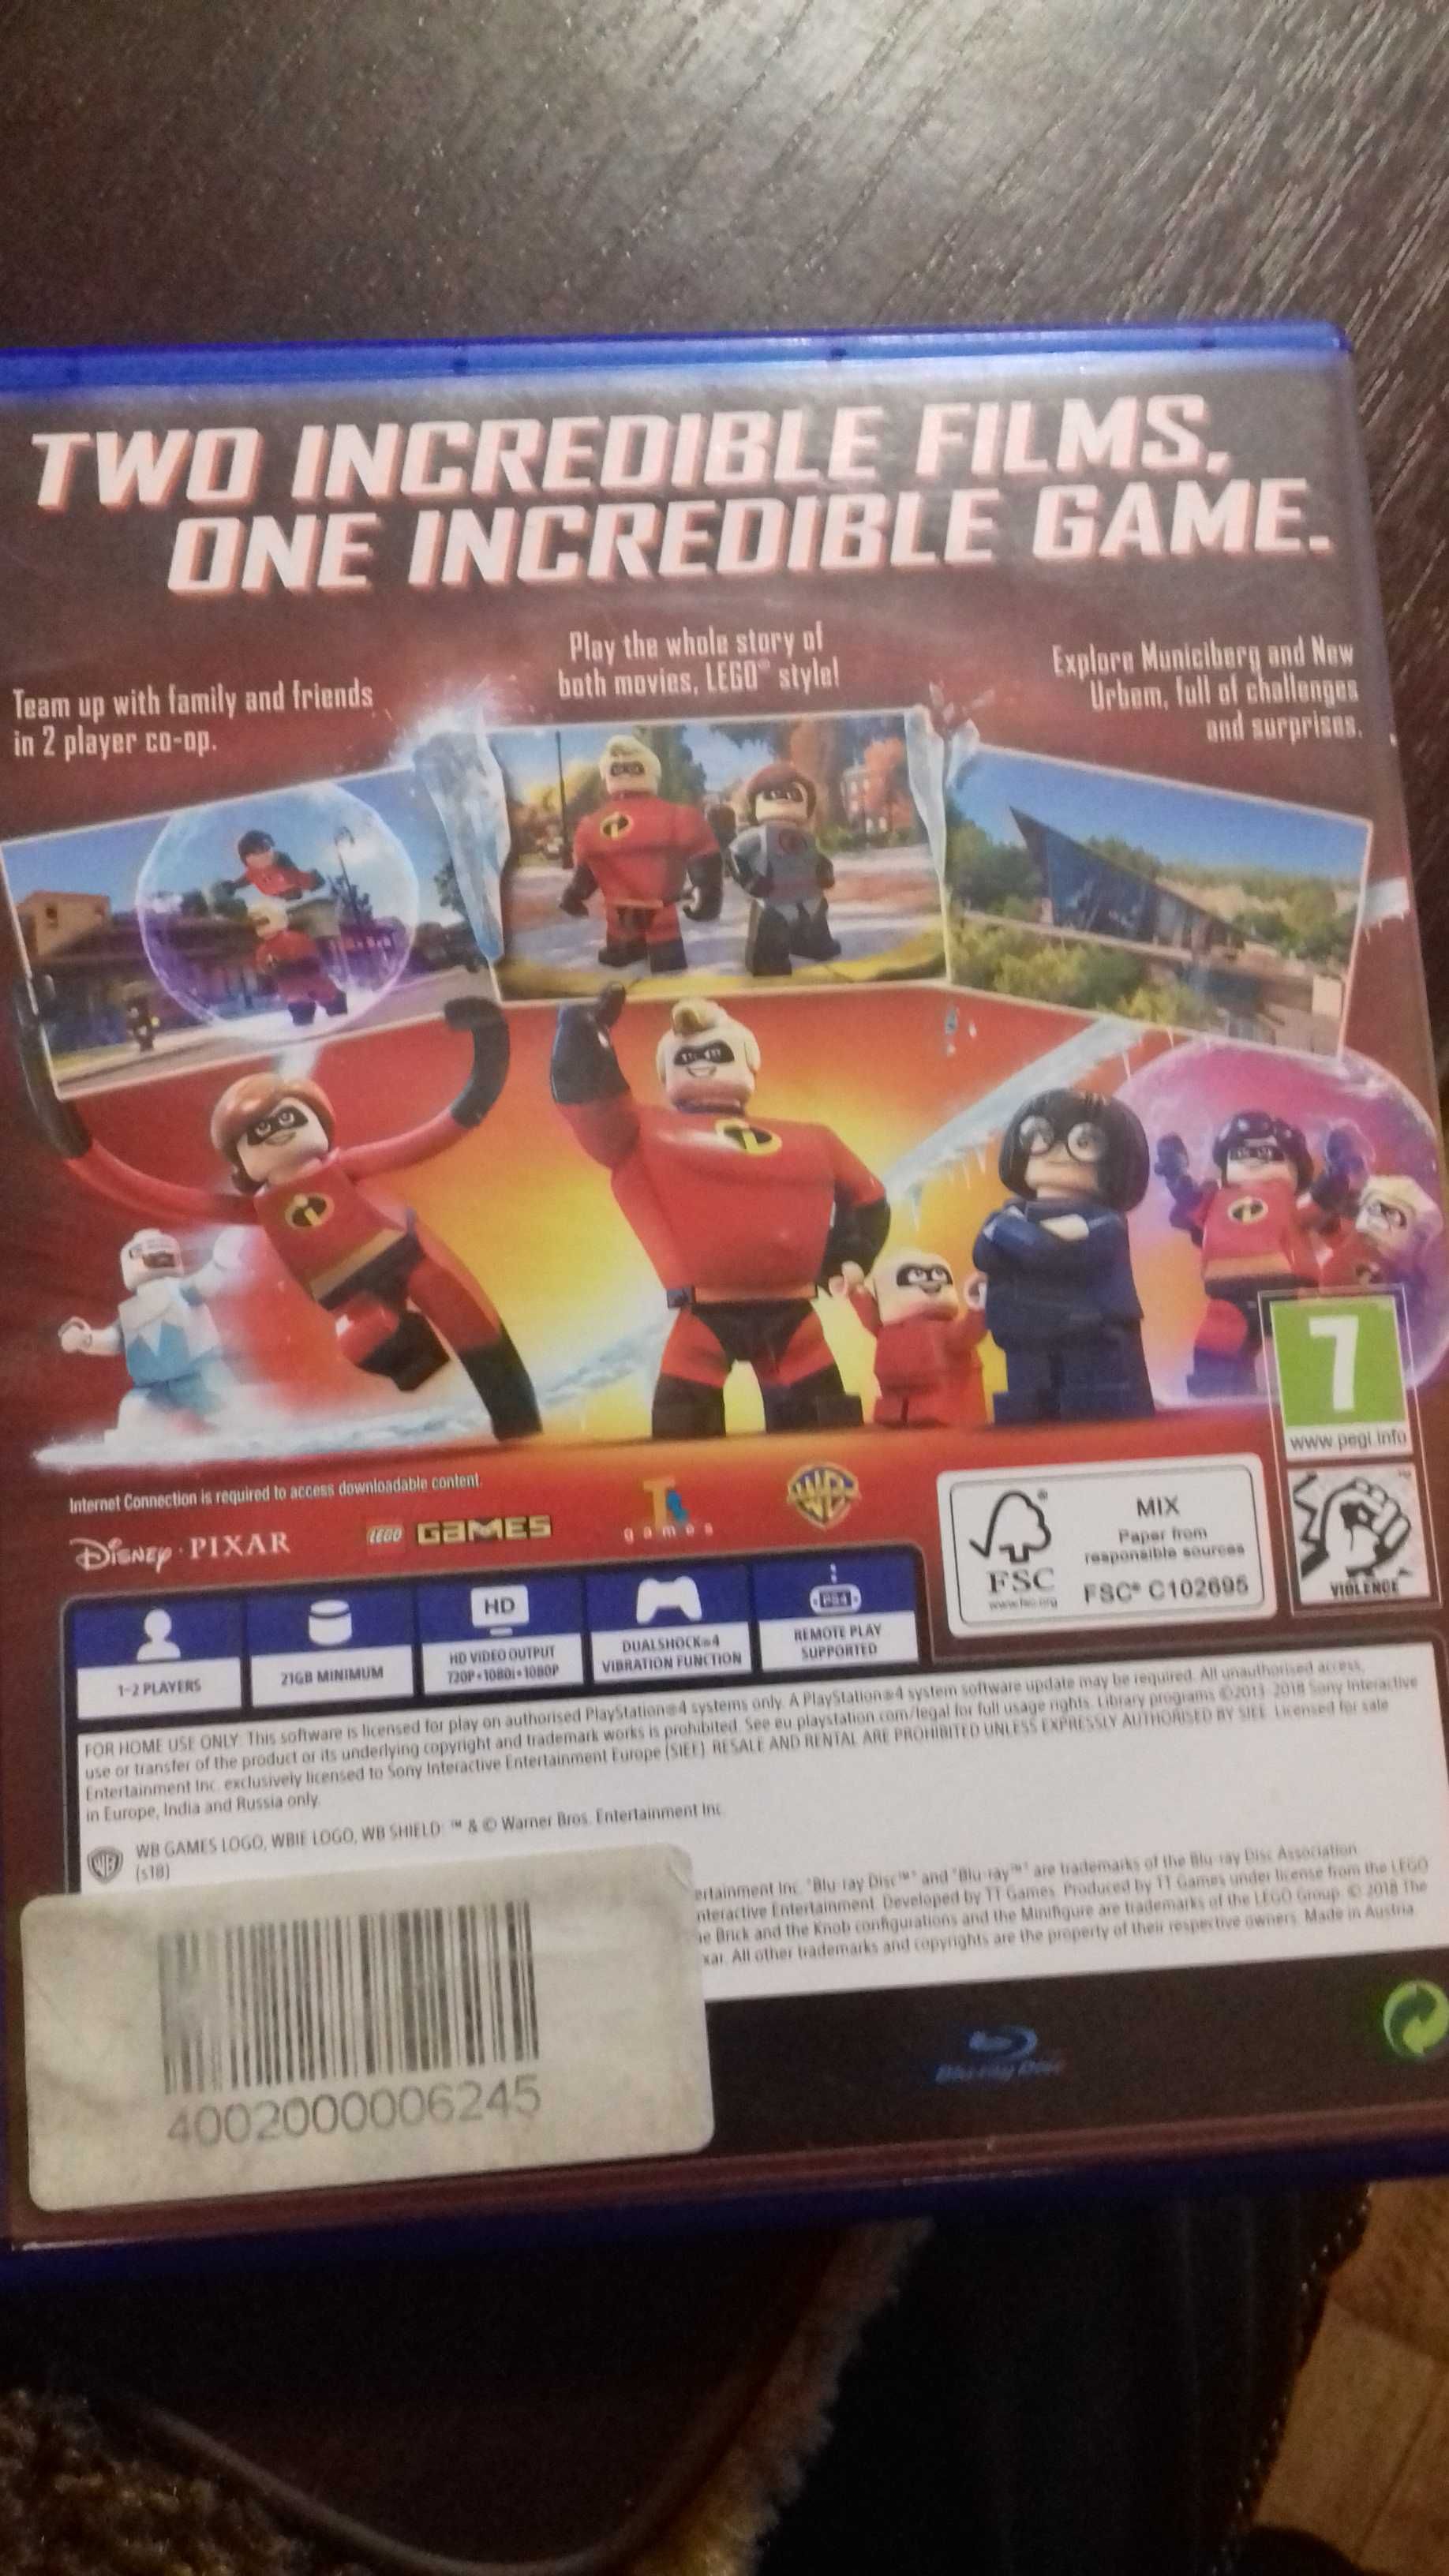 Lego Incredibles (Суперсемейка) PS4 (рос. субтитри)